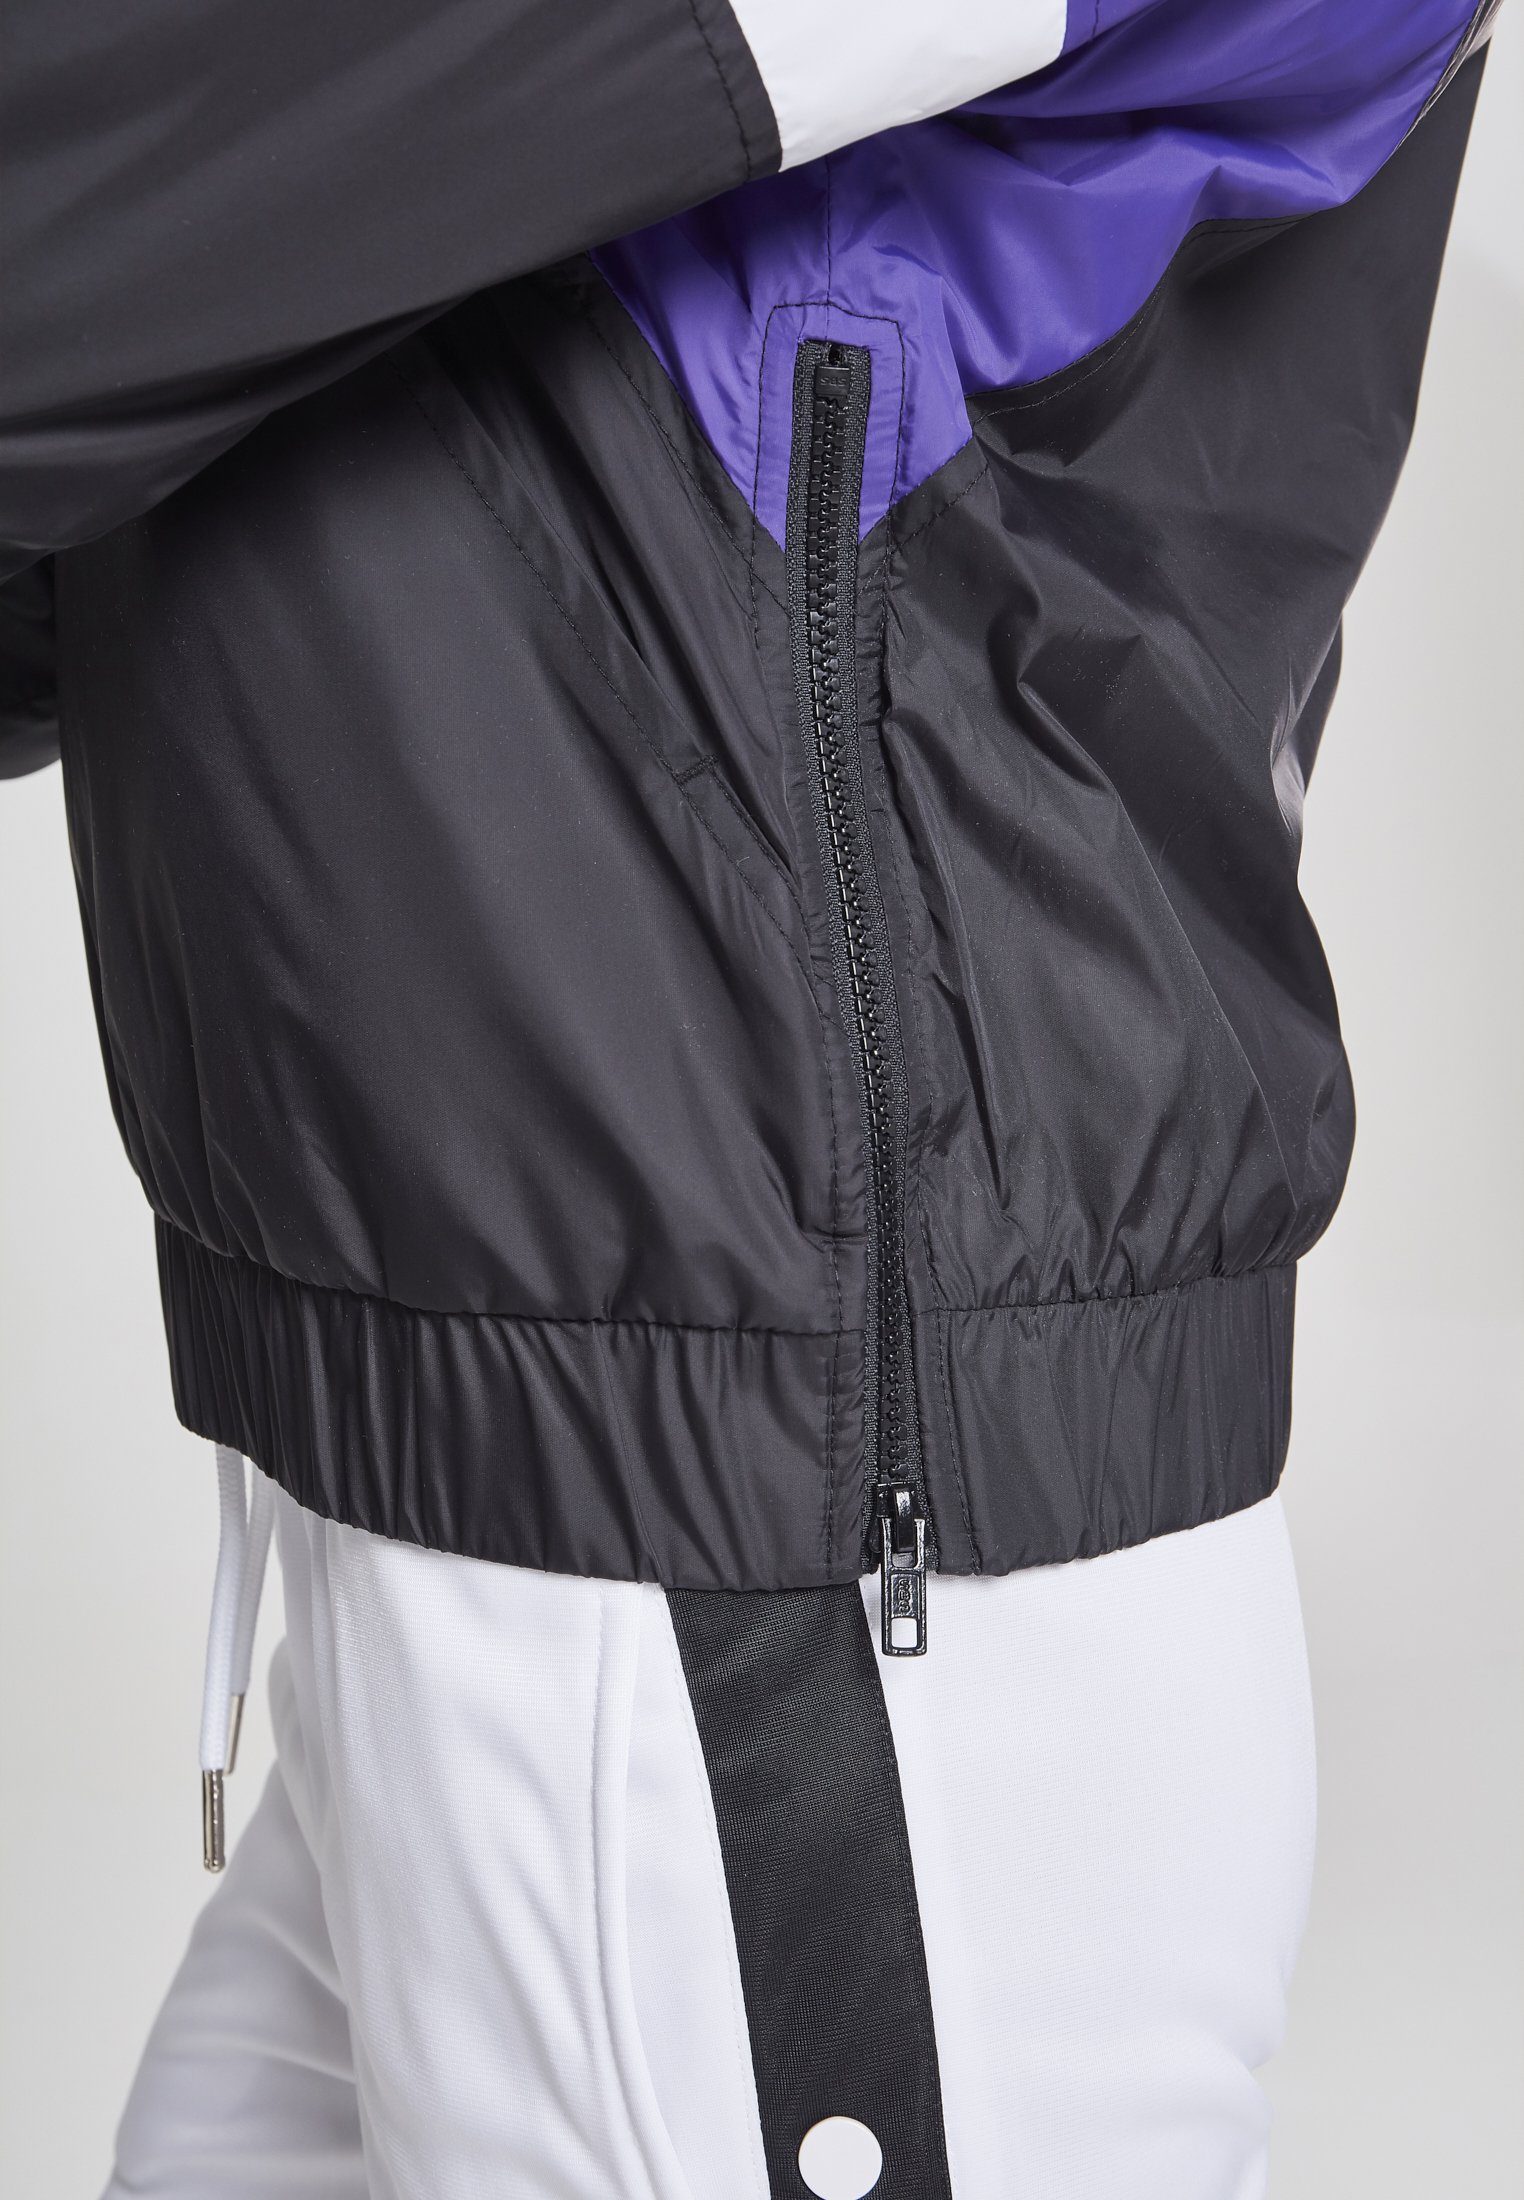 Padded Jacket Pull 3-Tone URBAN (1-St) Over CLASSICS Outdoorjacke black/ultraviolet/white Ladies Damen